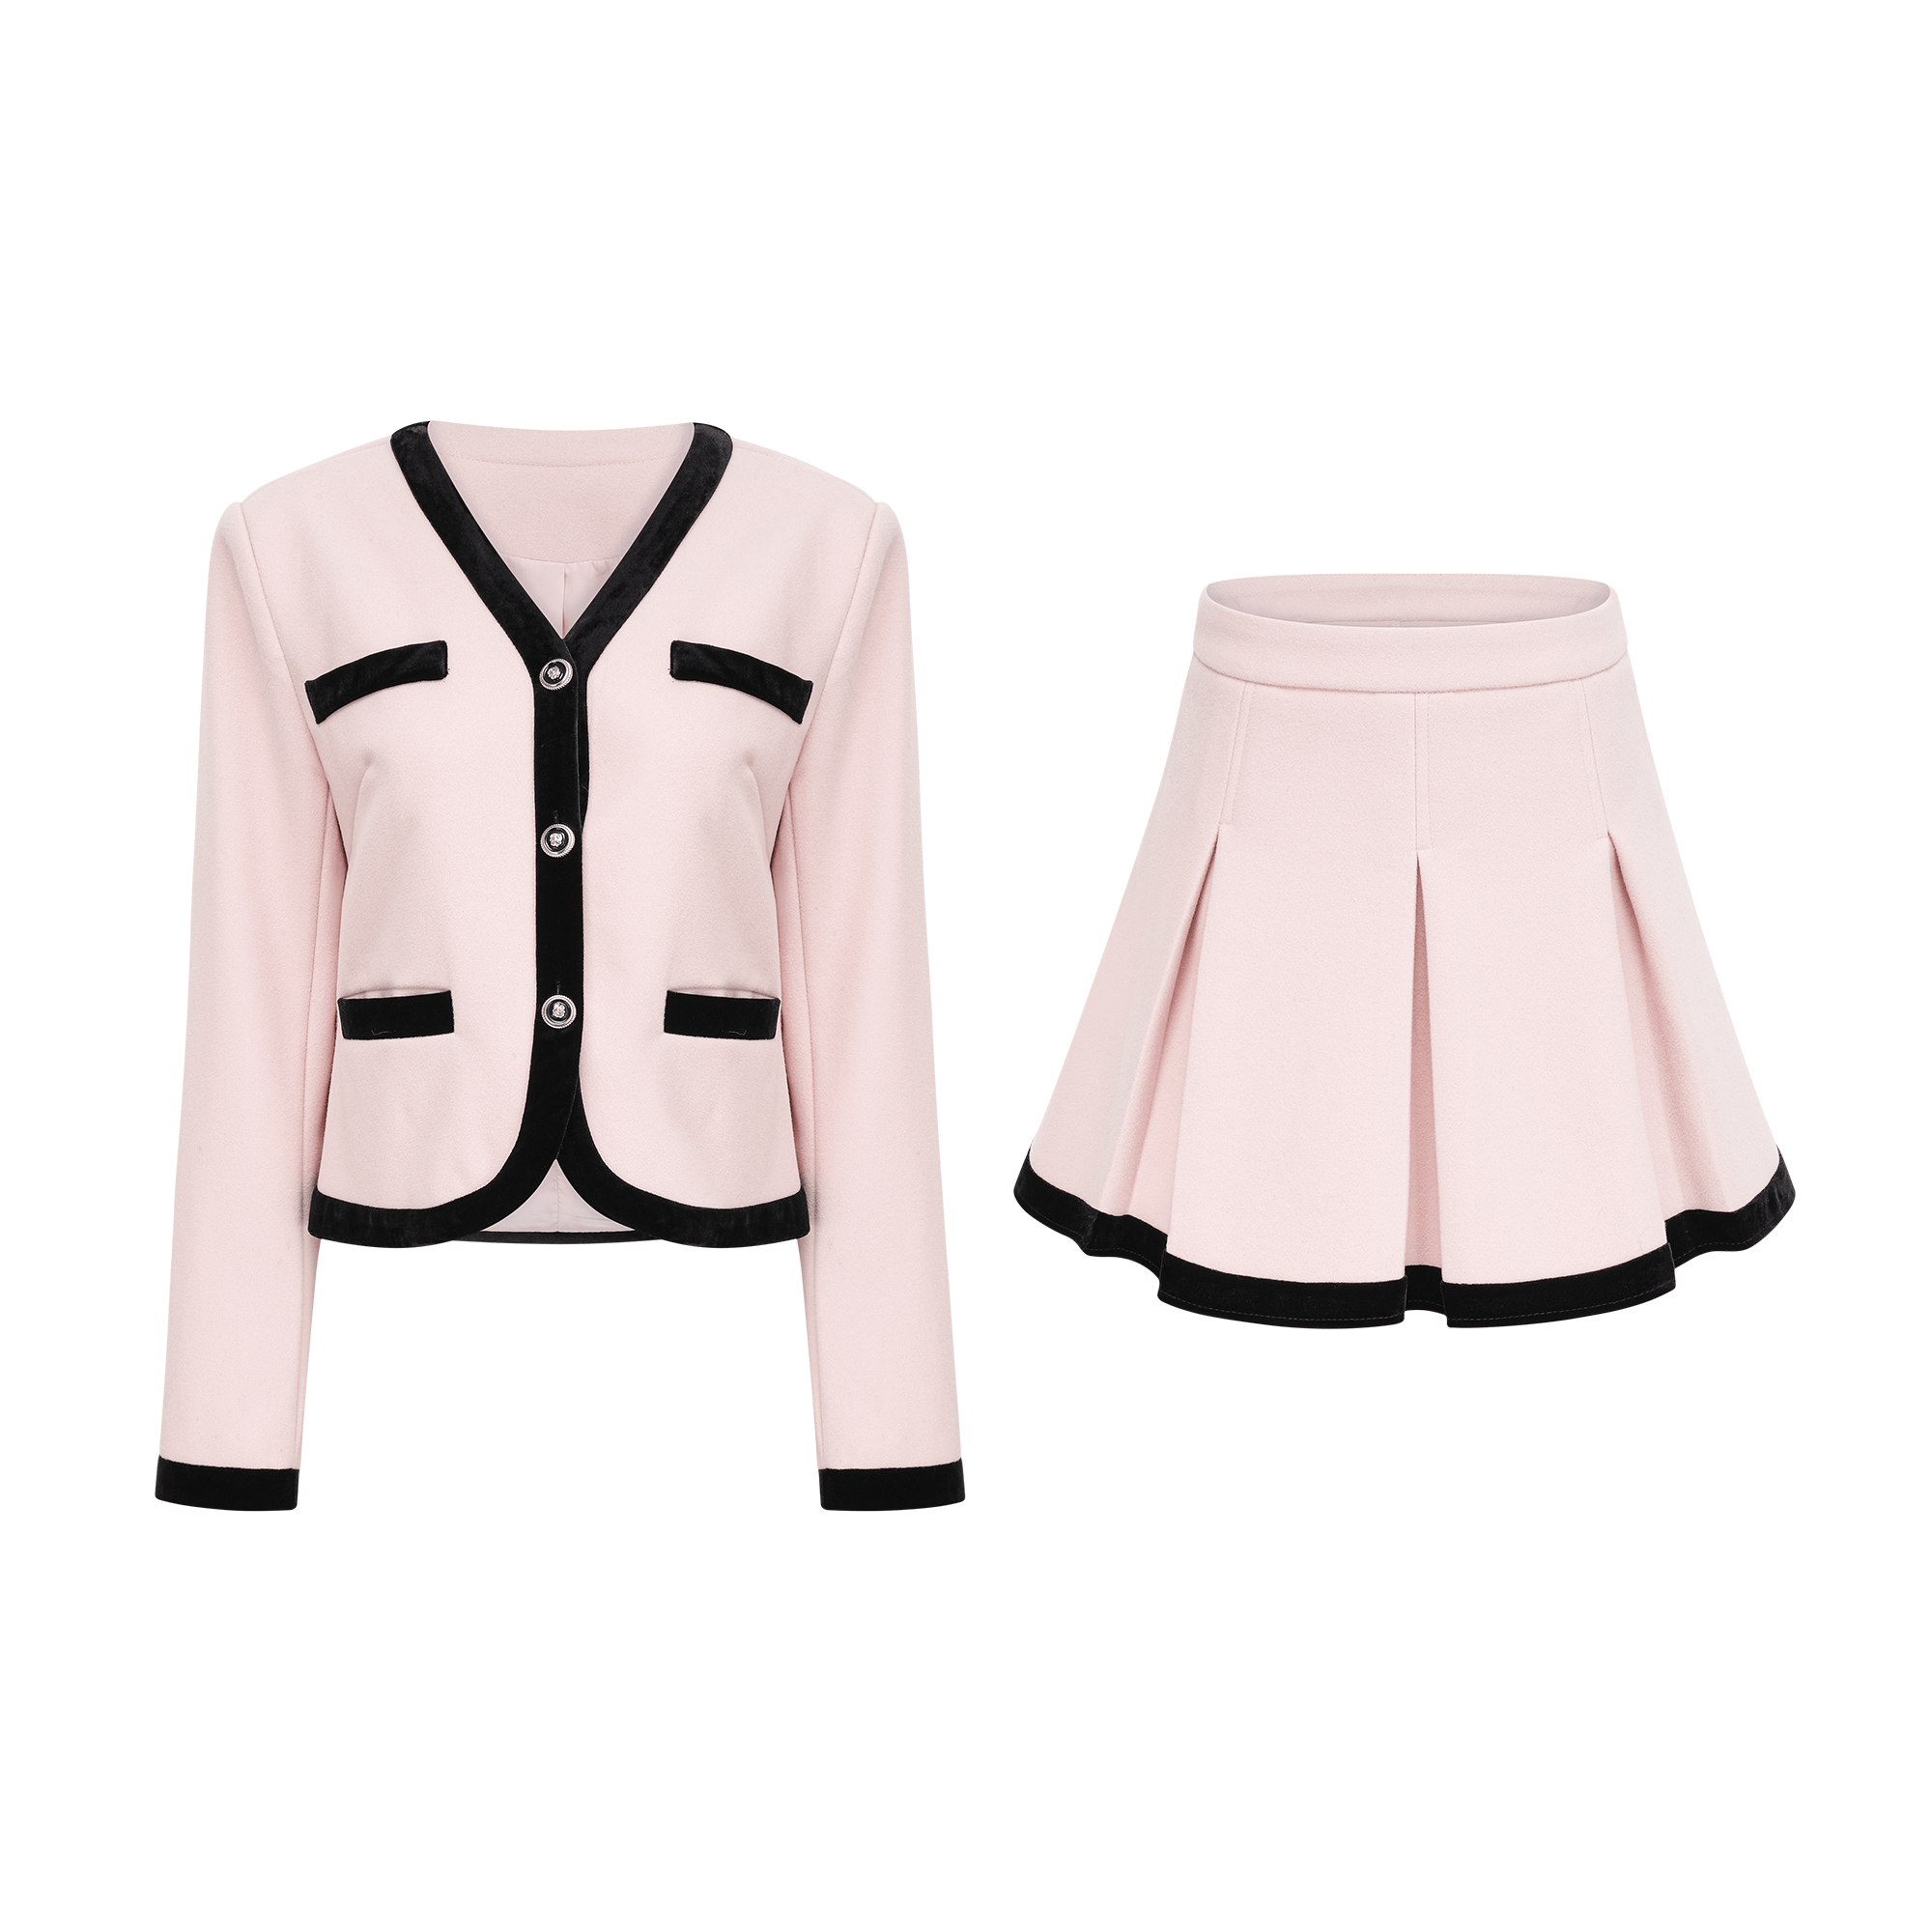 Odile jacket & top & skirt matching set - Miss Rosier - Women's Online Boutique